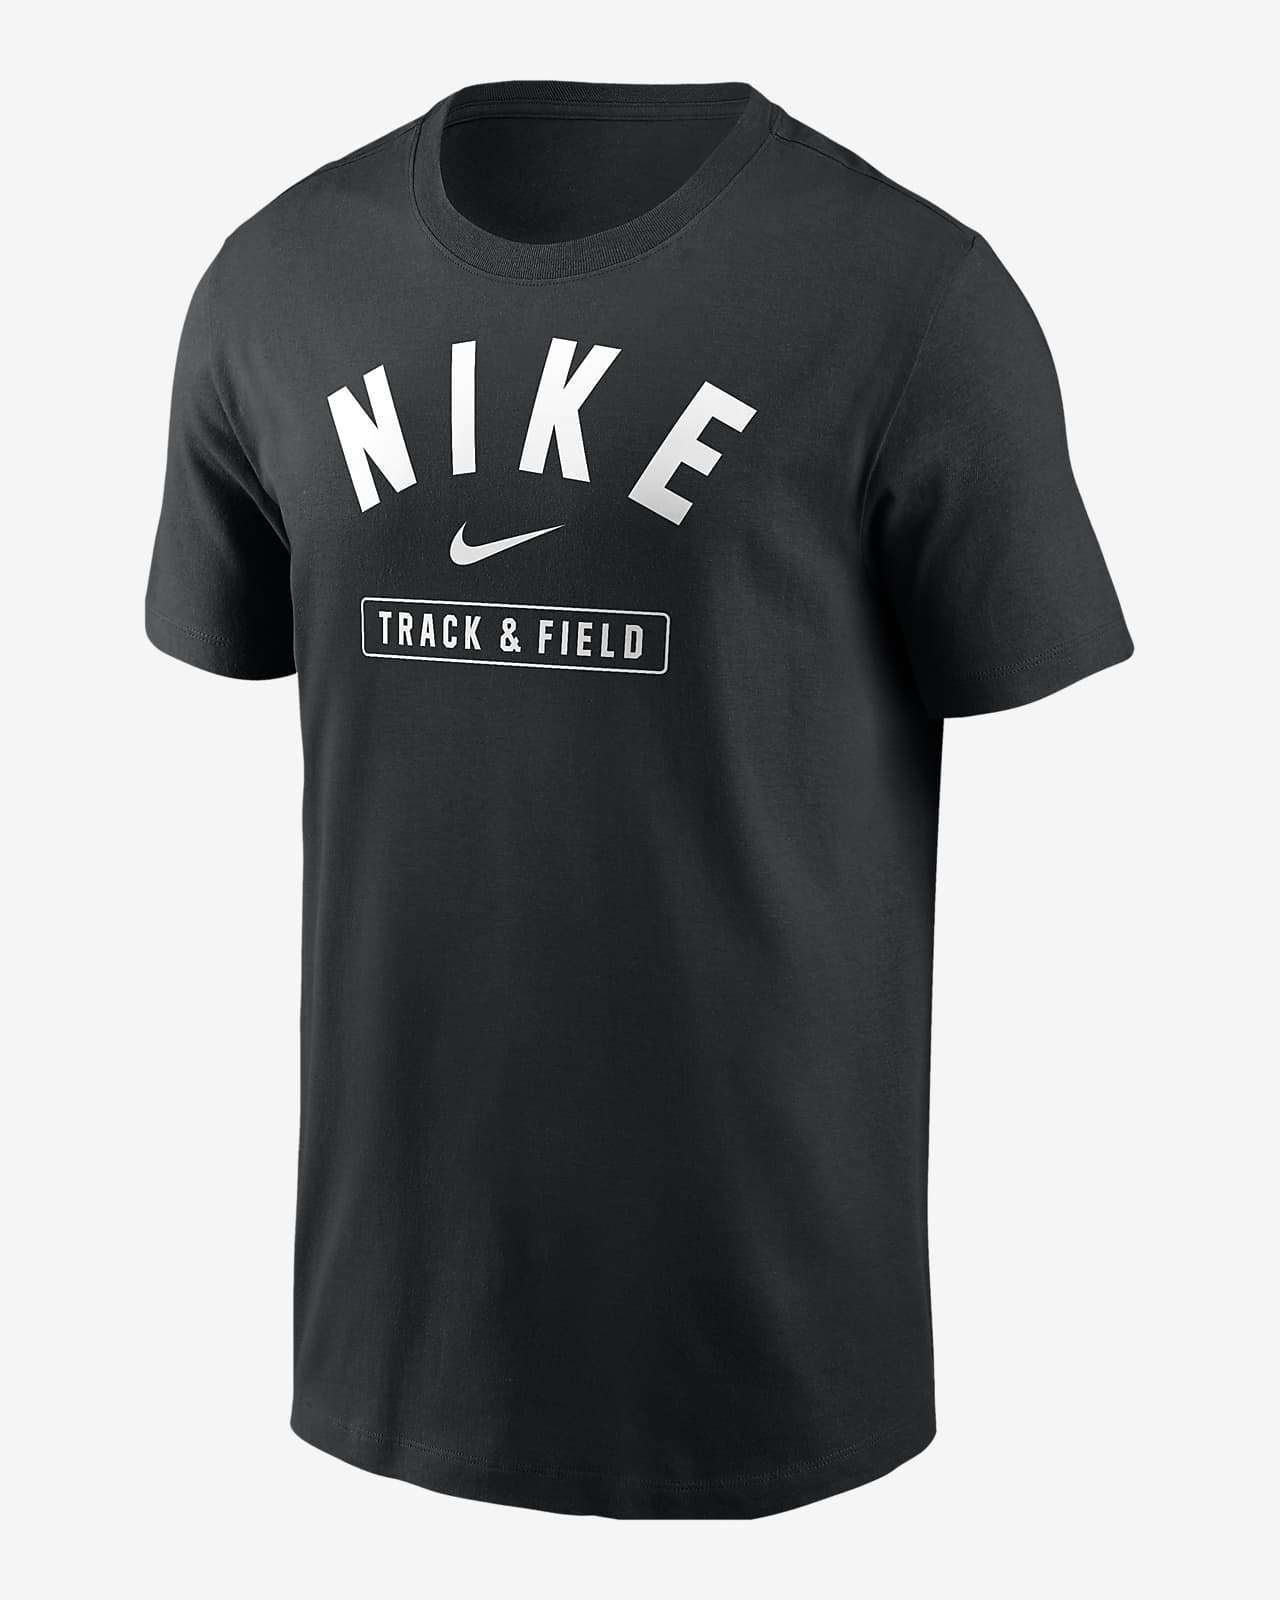 Nike Men's Track & Field T-Shirt